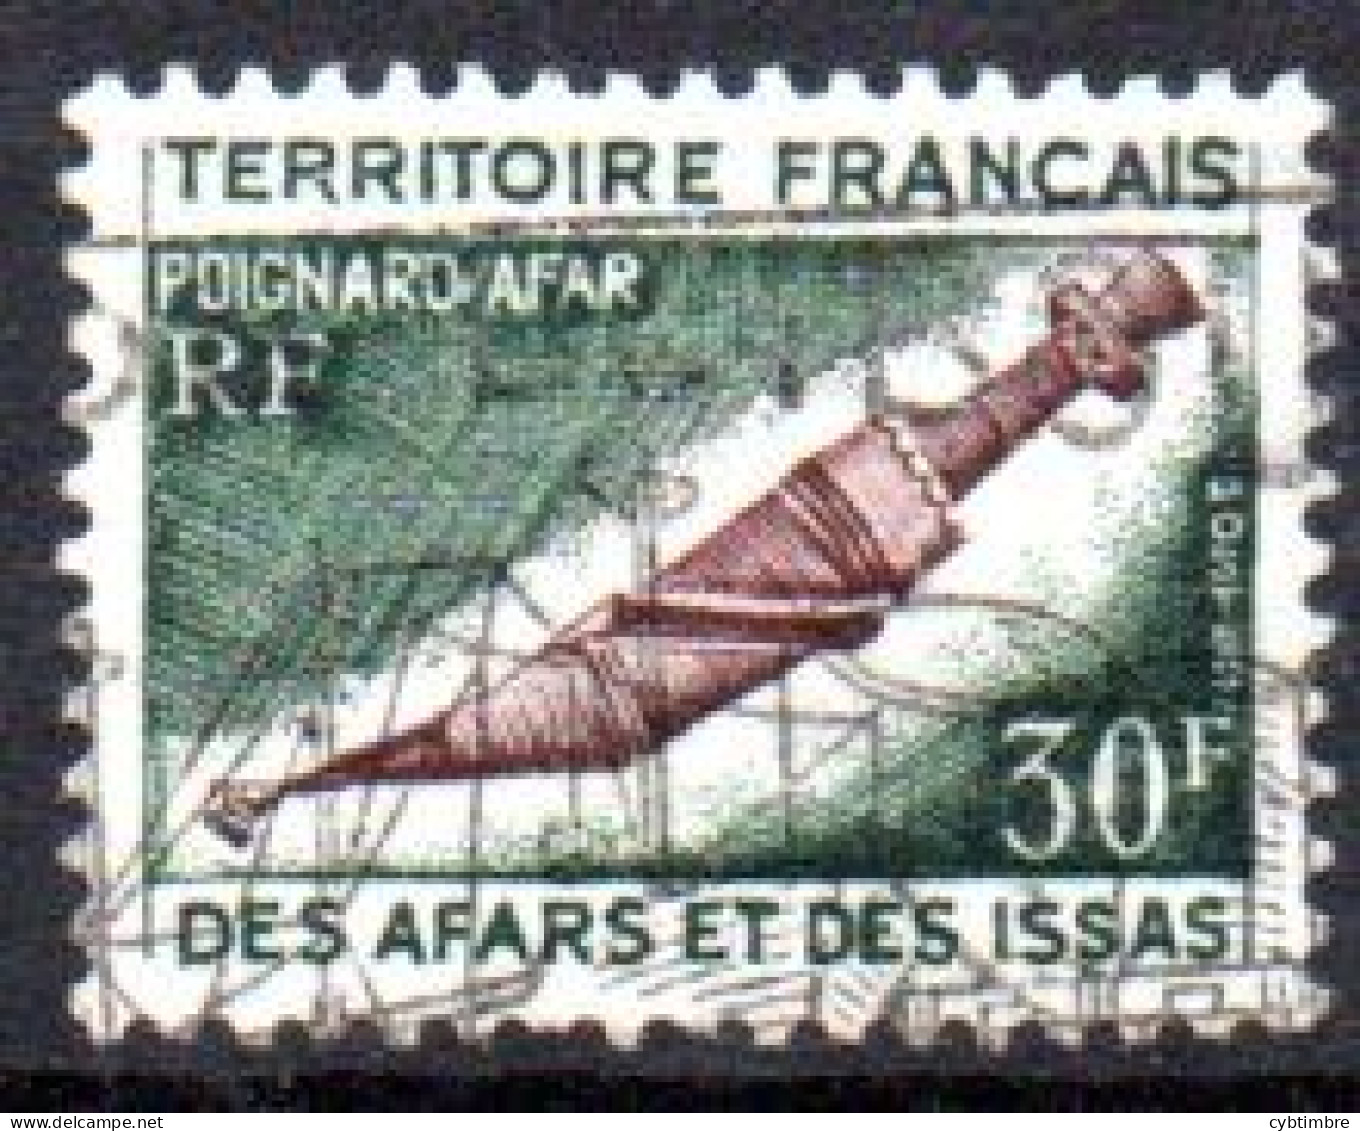 Afars Et Issas.:Yvert N° 383° - Used Stamps